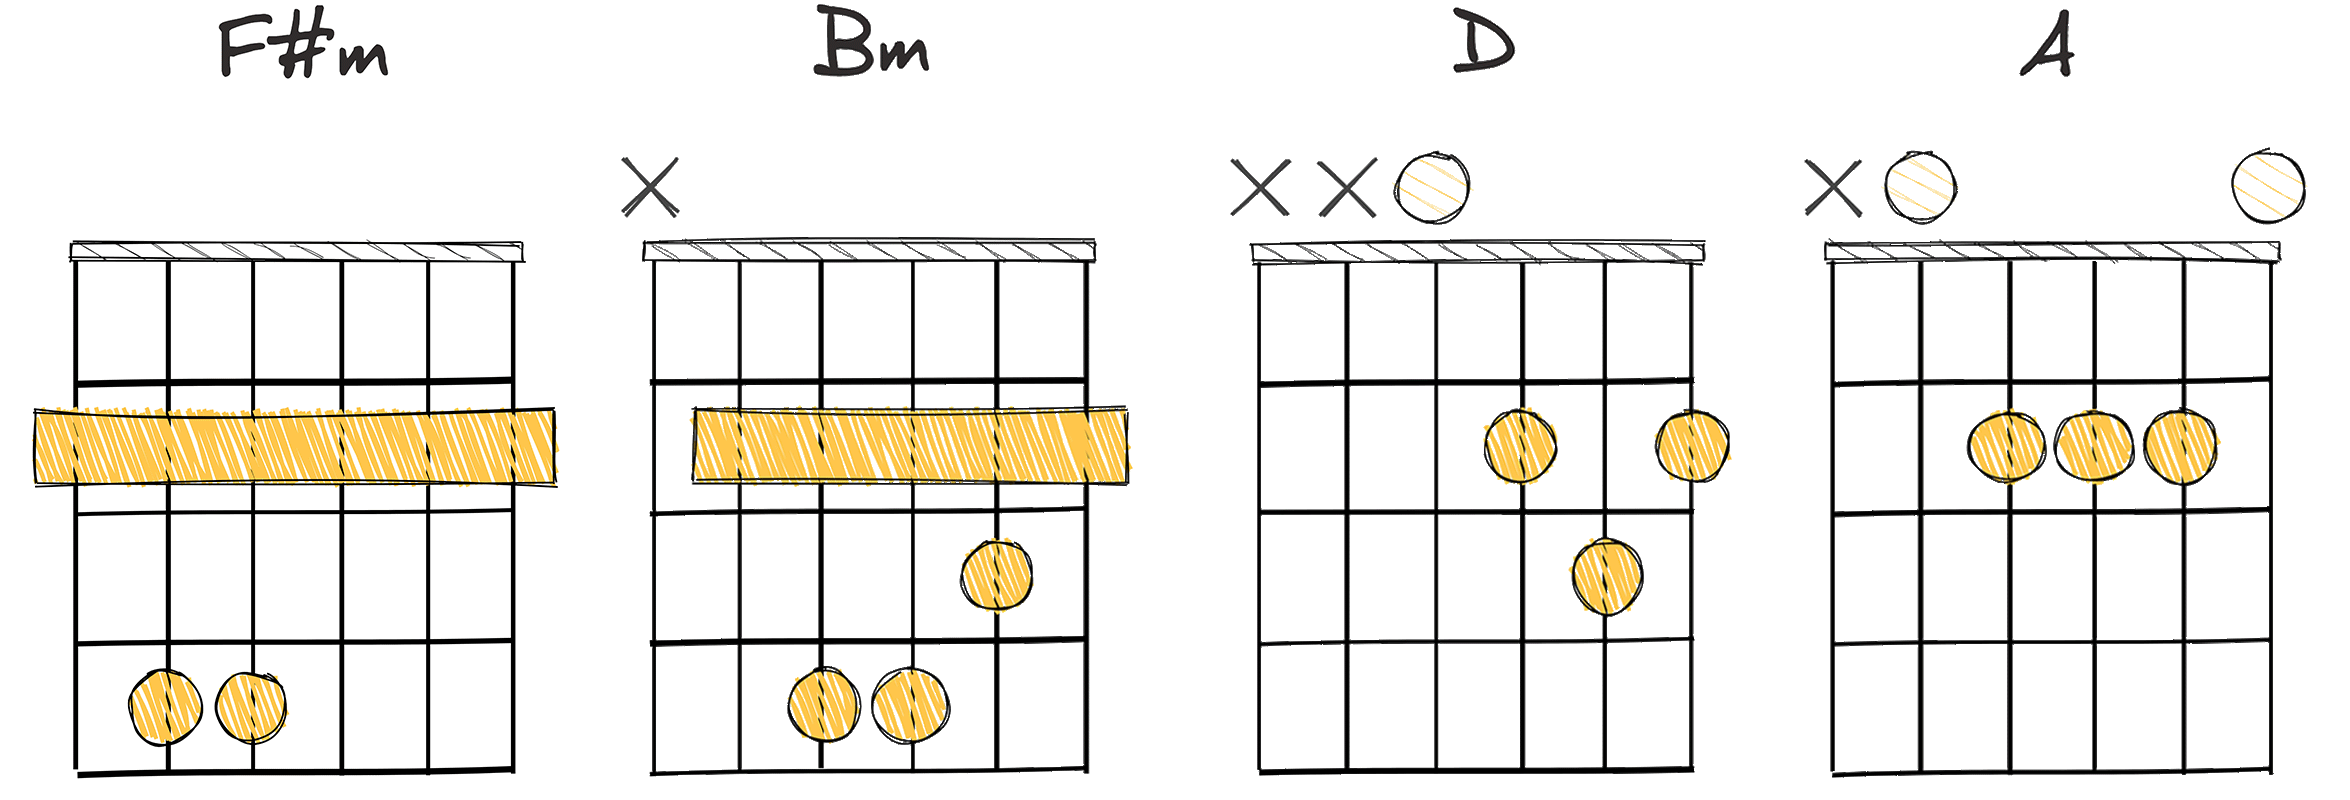 vi-ii-IV-I (6-2-4-1) chords diagram